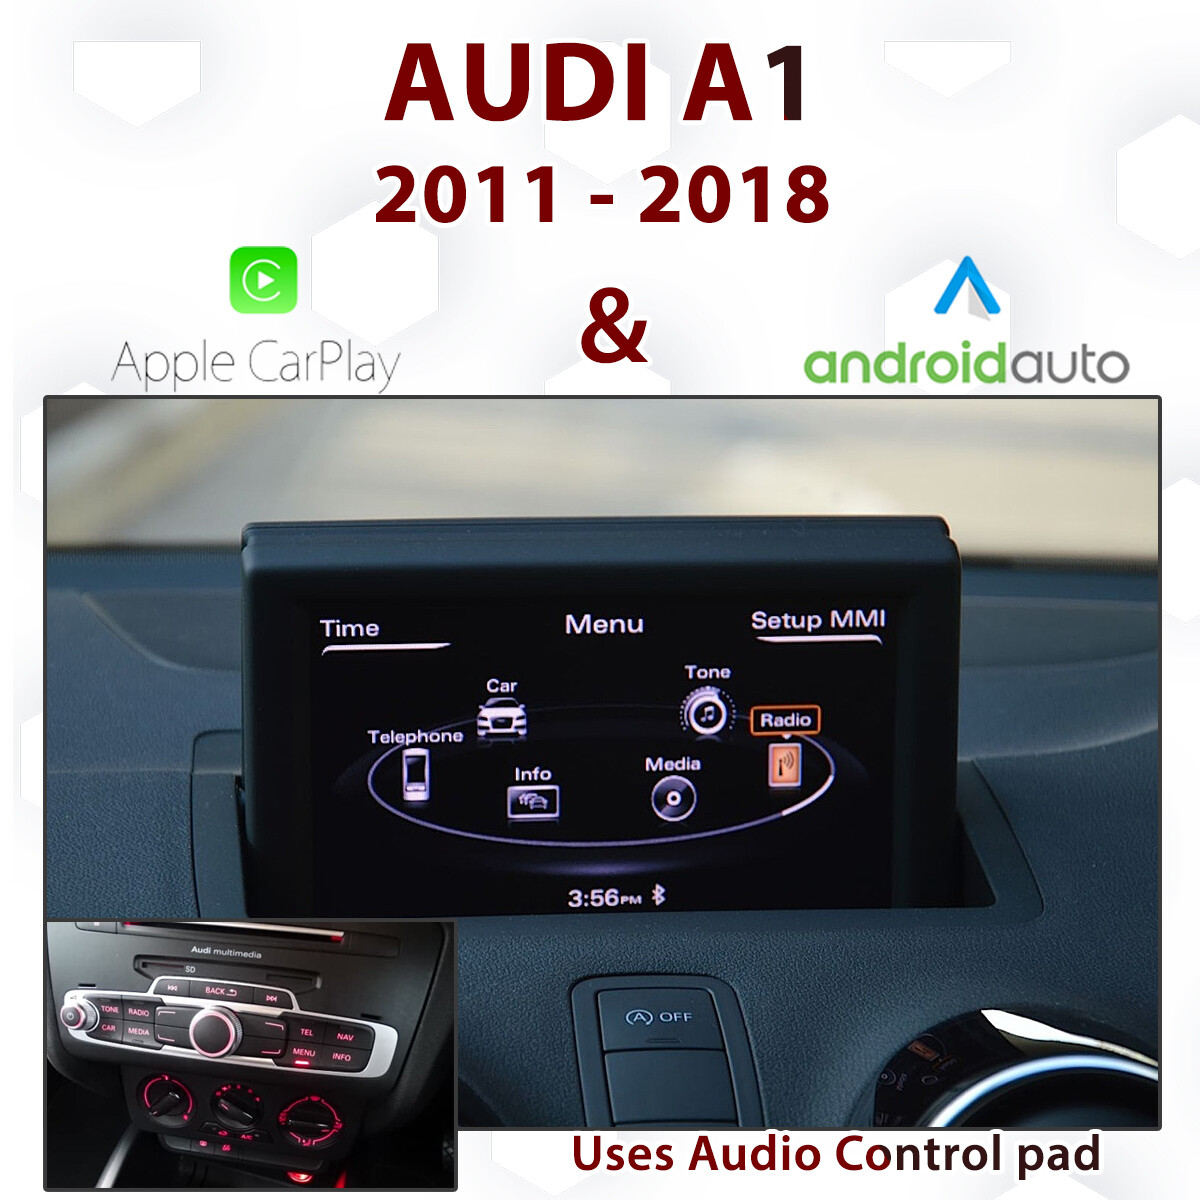 [DIAL] Audi A1 RMC Media Audio - Apple CarPlay & Android Auto Integration